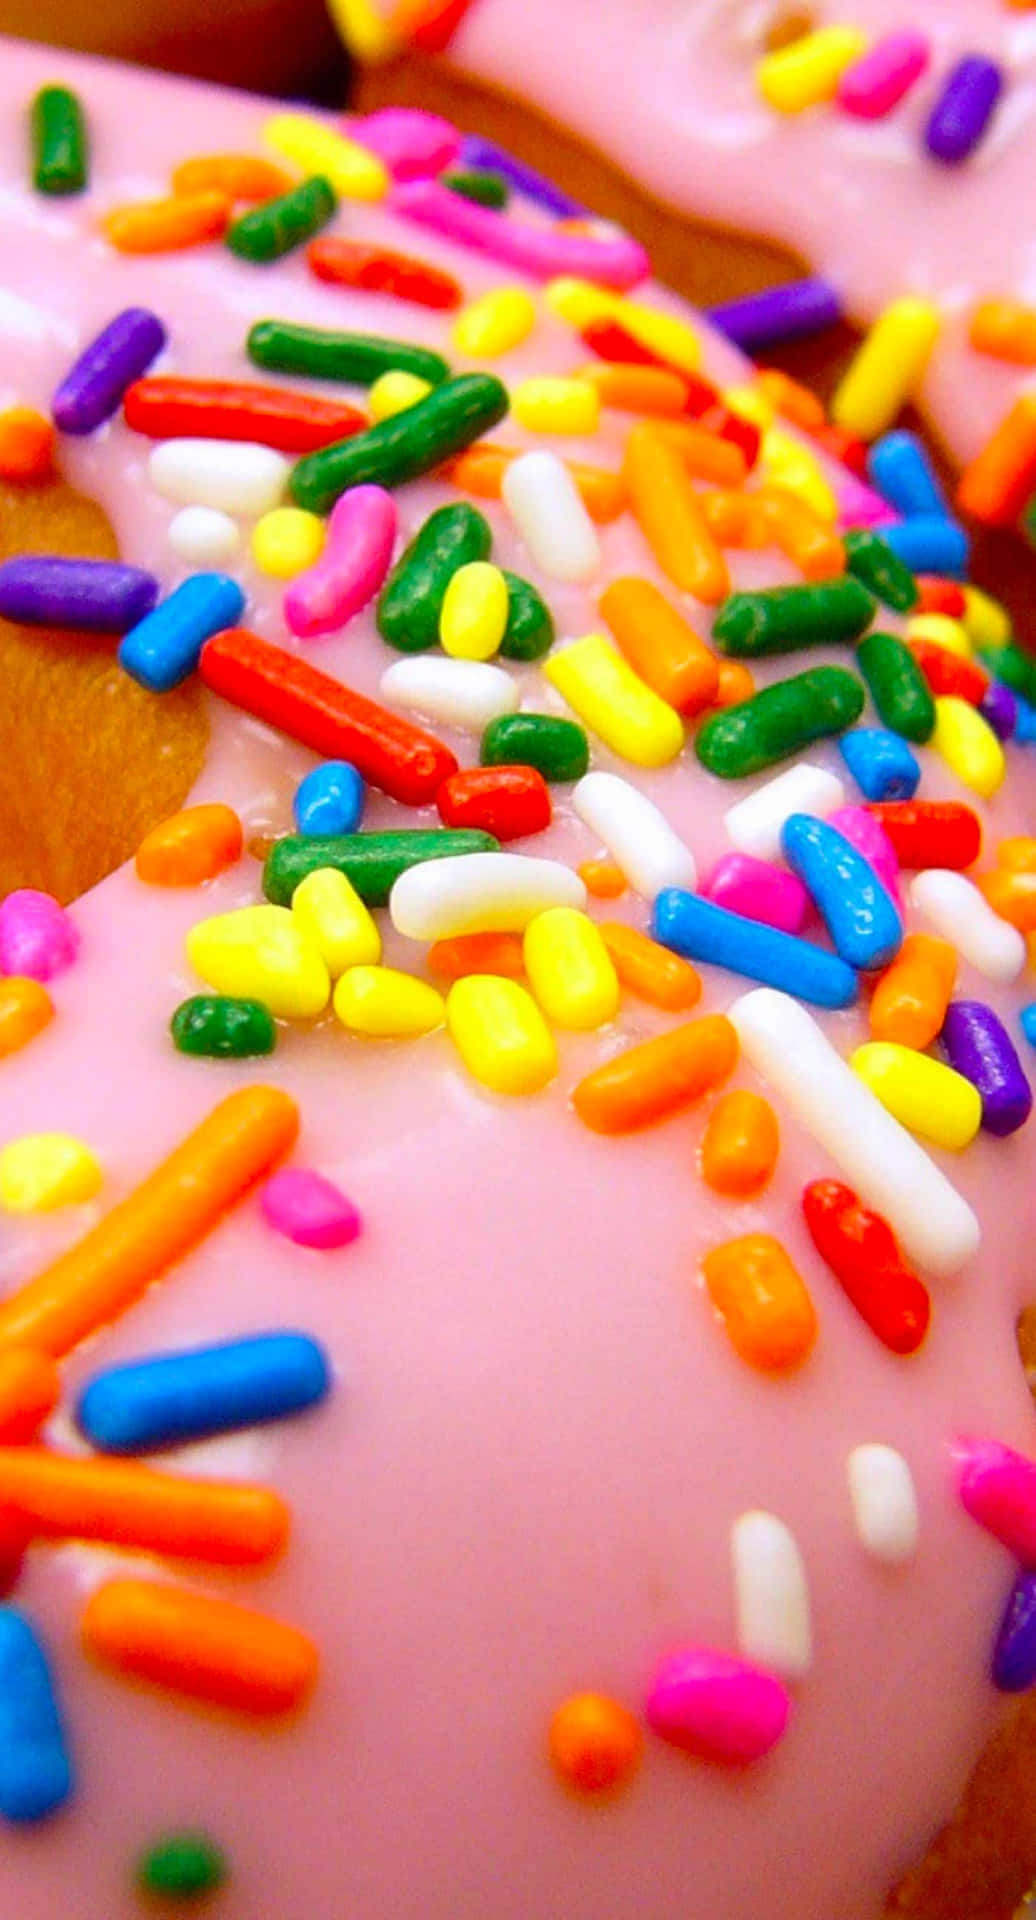 Download Dessert Iphone Colorful Doughnut Sprinkles Wallpaper | Wallpapers .com